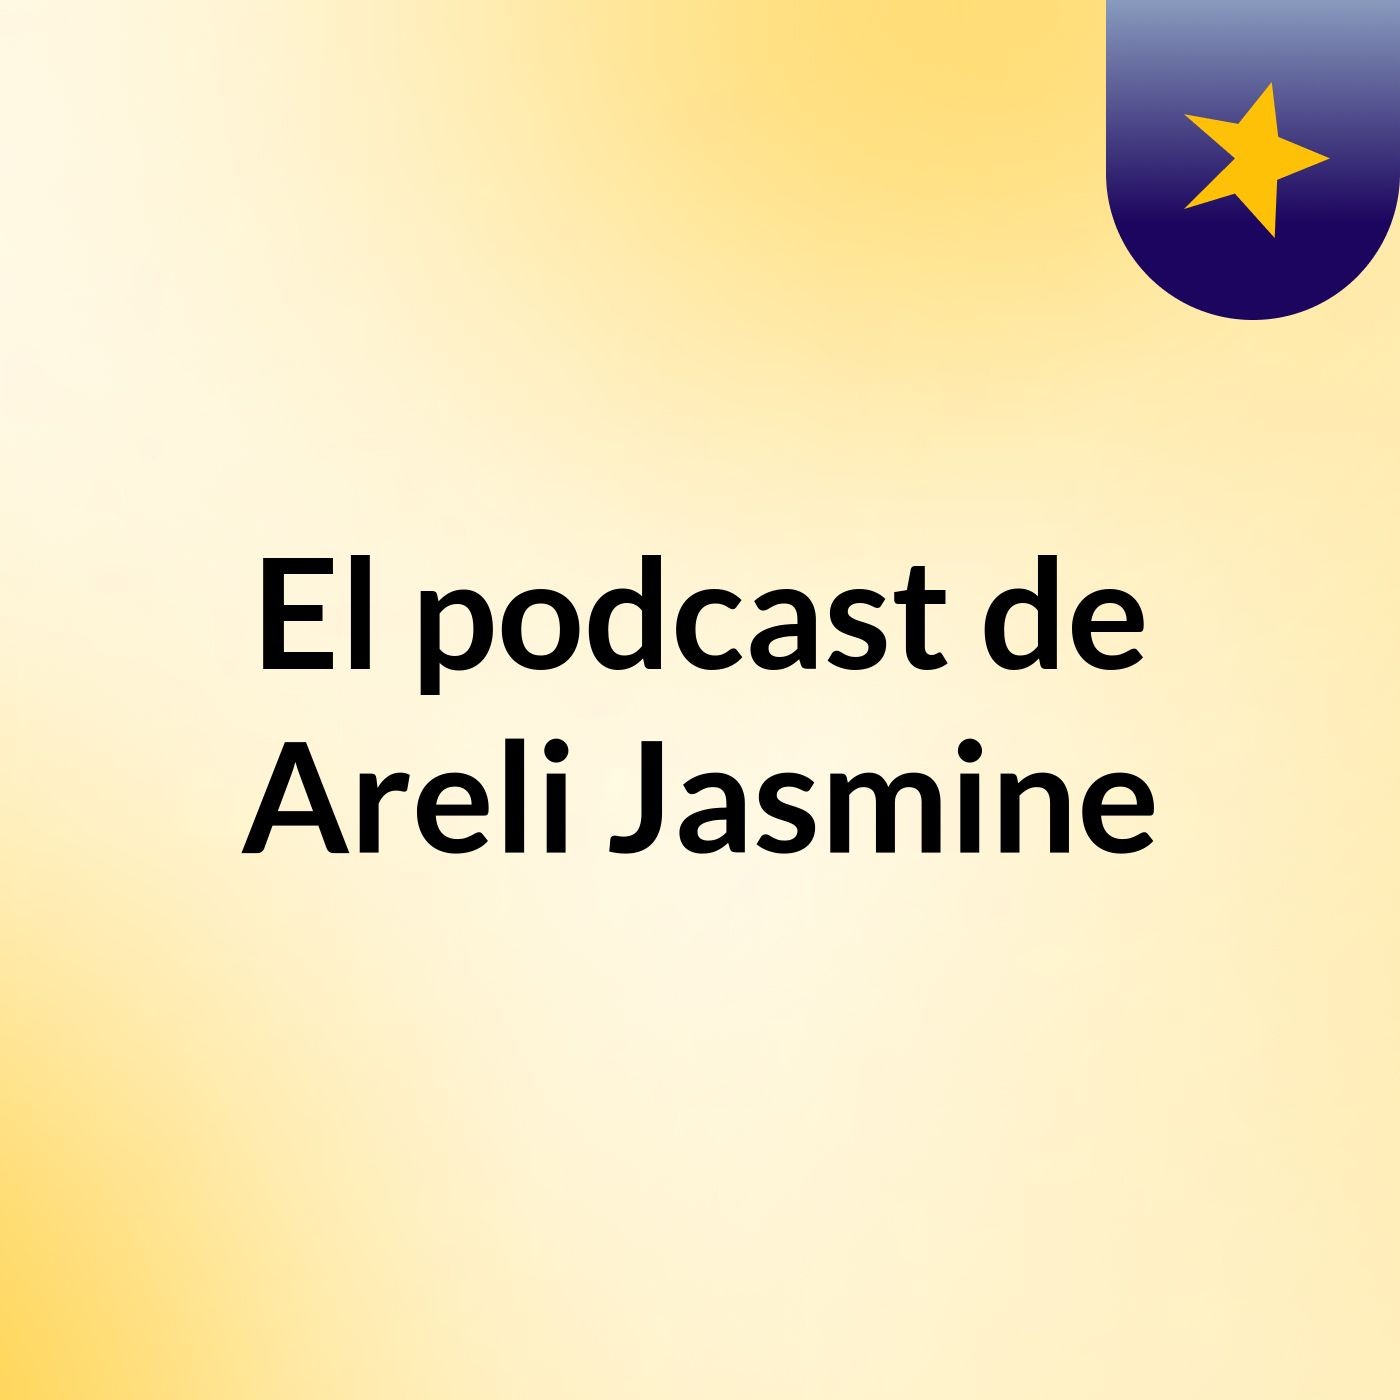 El podcast de Areli Jasmine